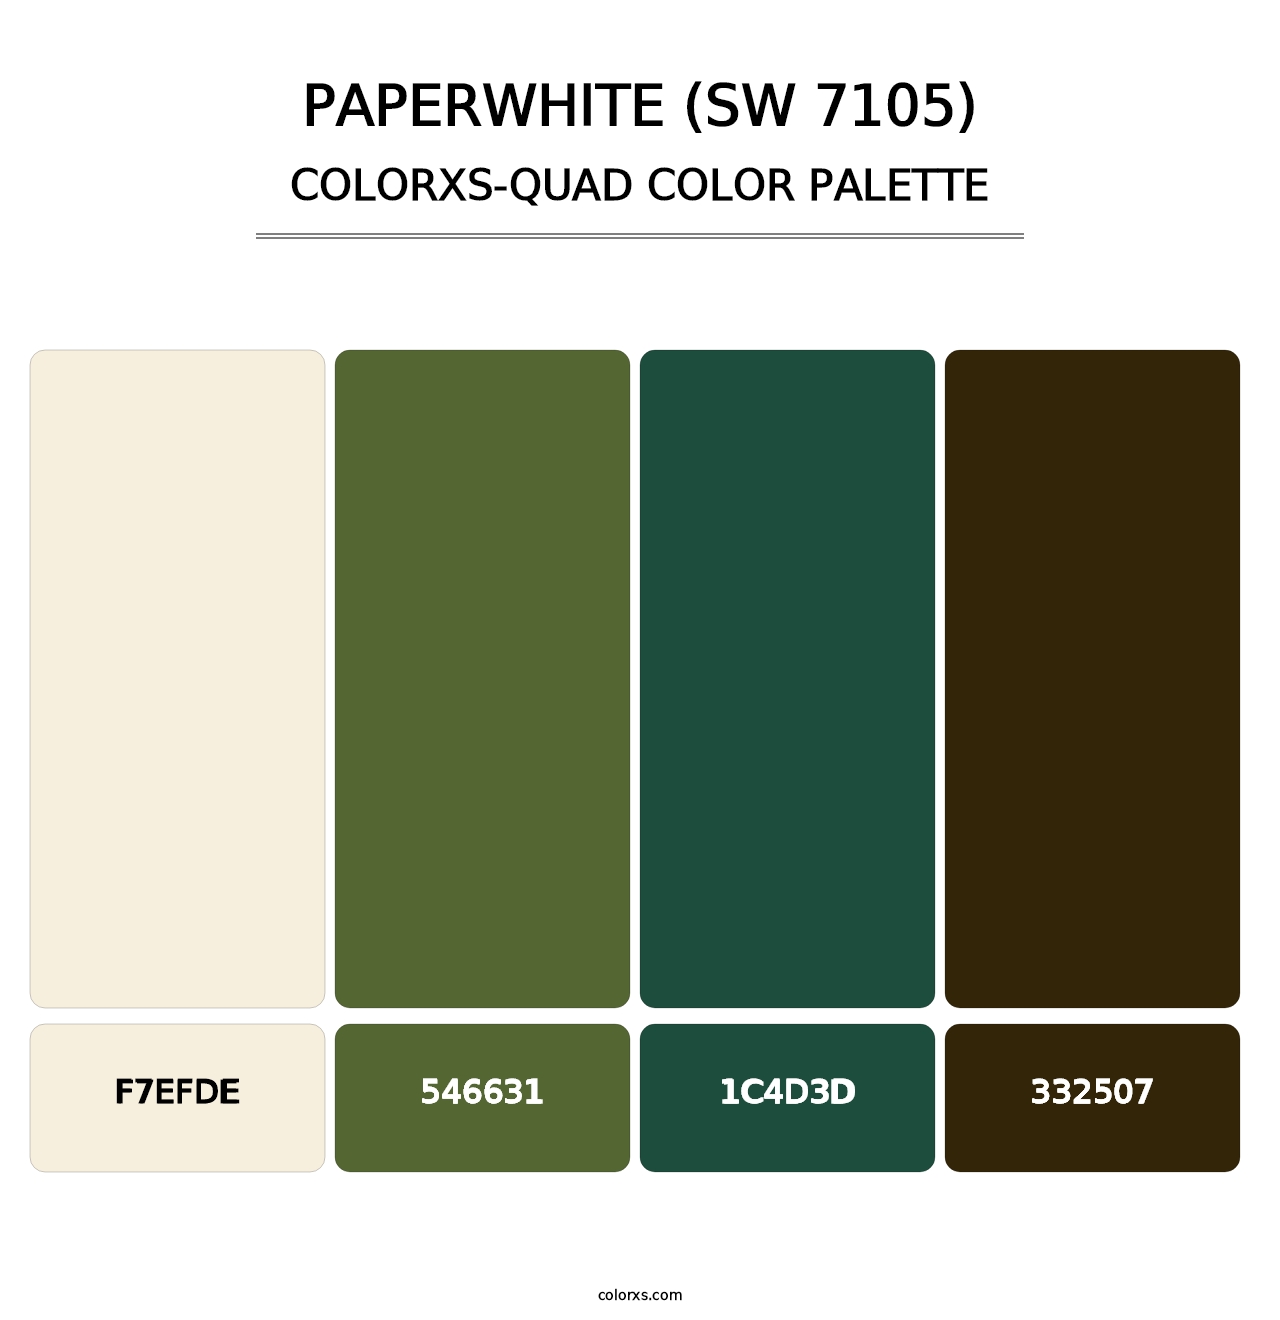 Paperwhite (SW 7105) - Colorxs Quad Palette